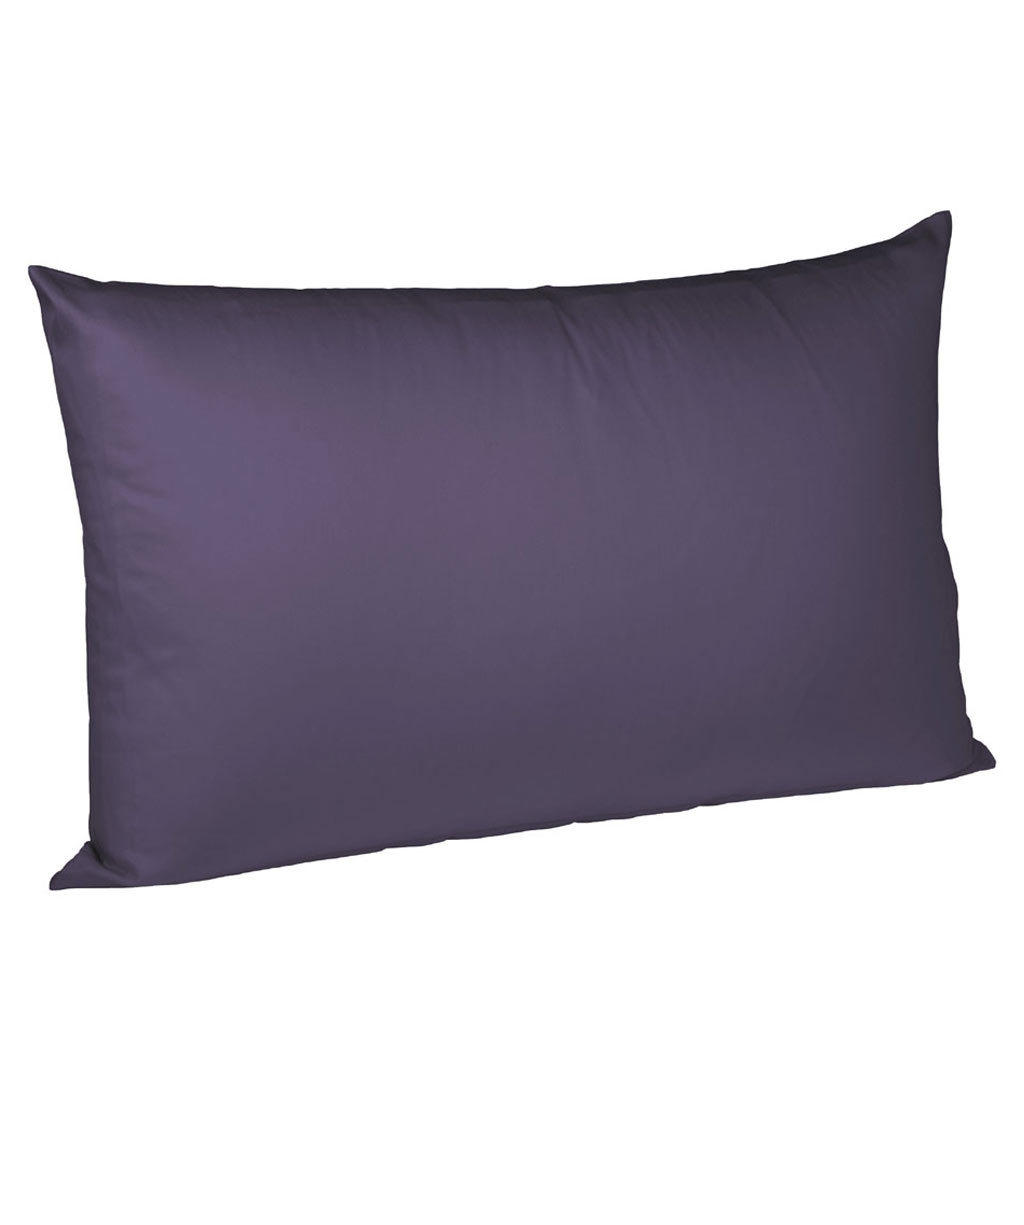 OBLIEČKA NA VANKÚŠ, 40/40 cm, bavlna - fialová, Basics, textil (40/40cm) - Fleuresse